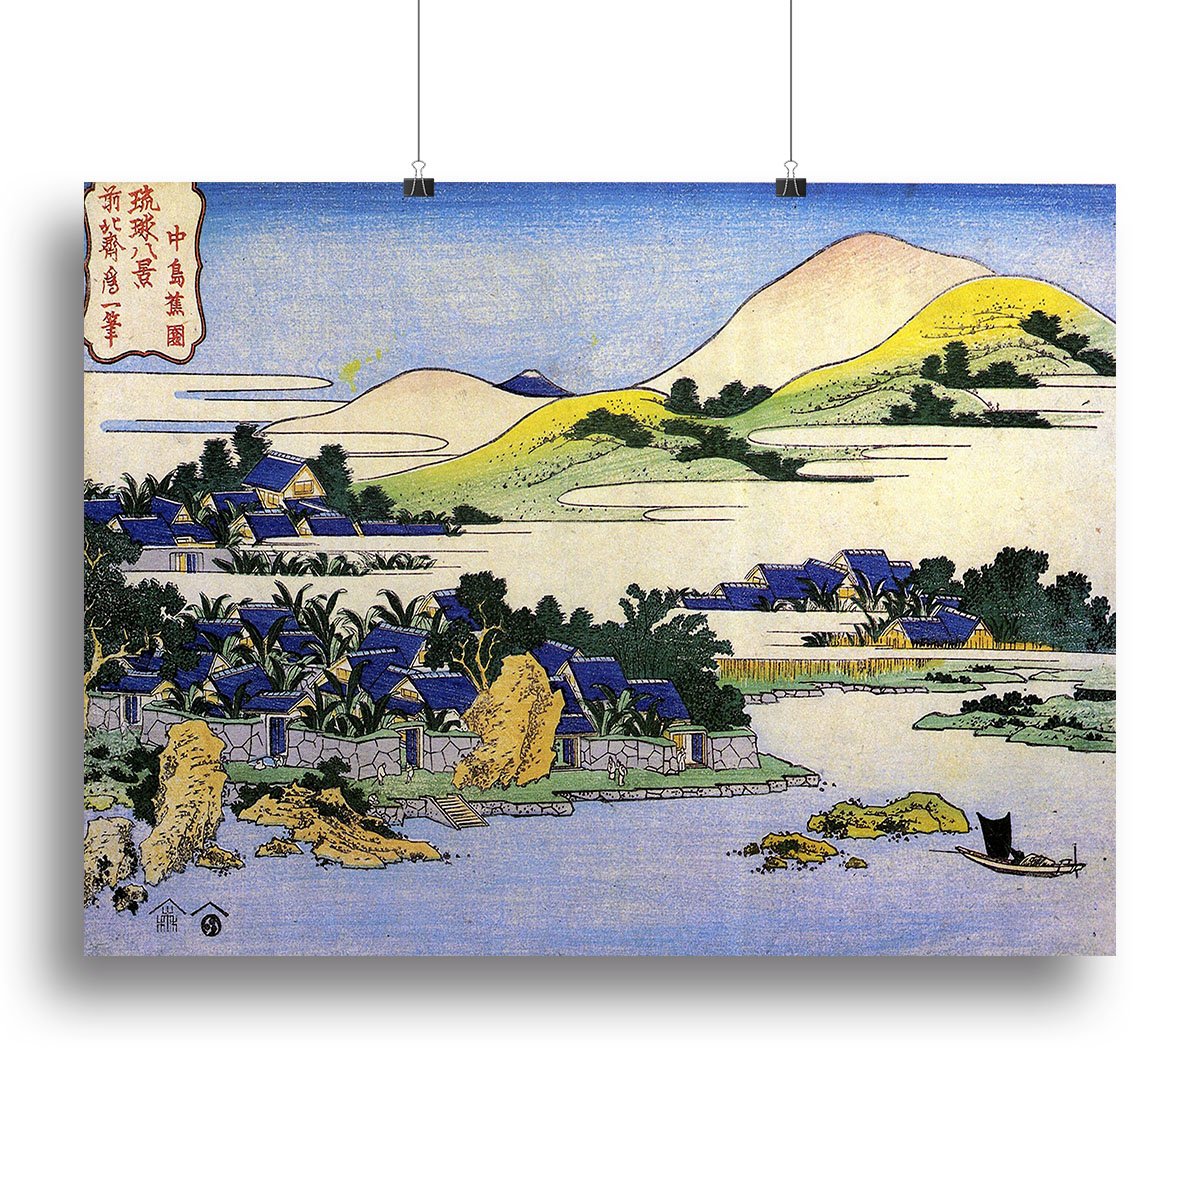 Landscape of Ryukyu by Hokusai Canvas Print or Poster